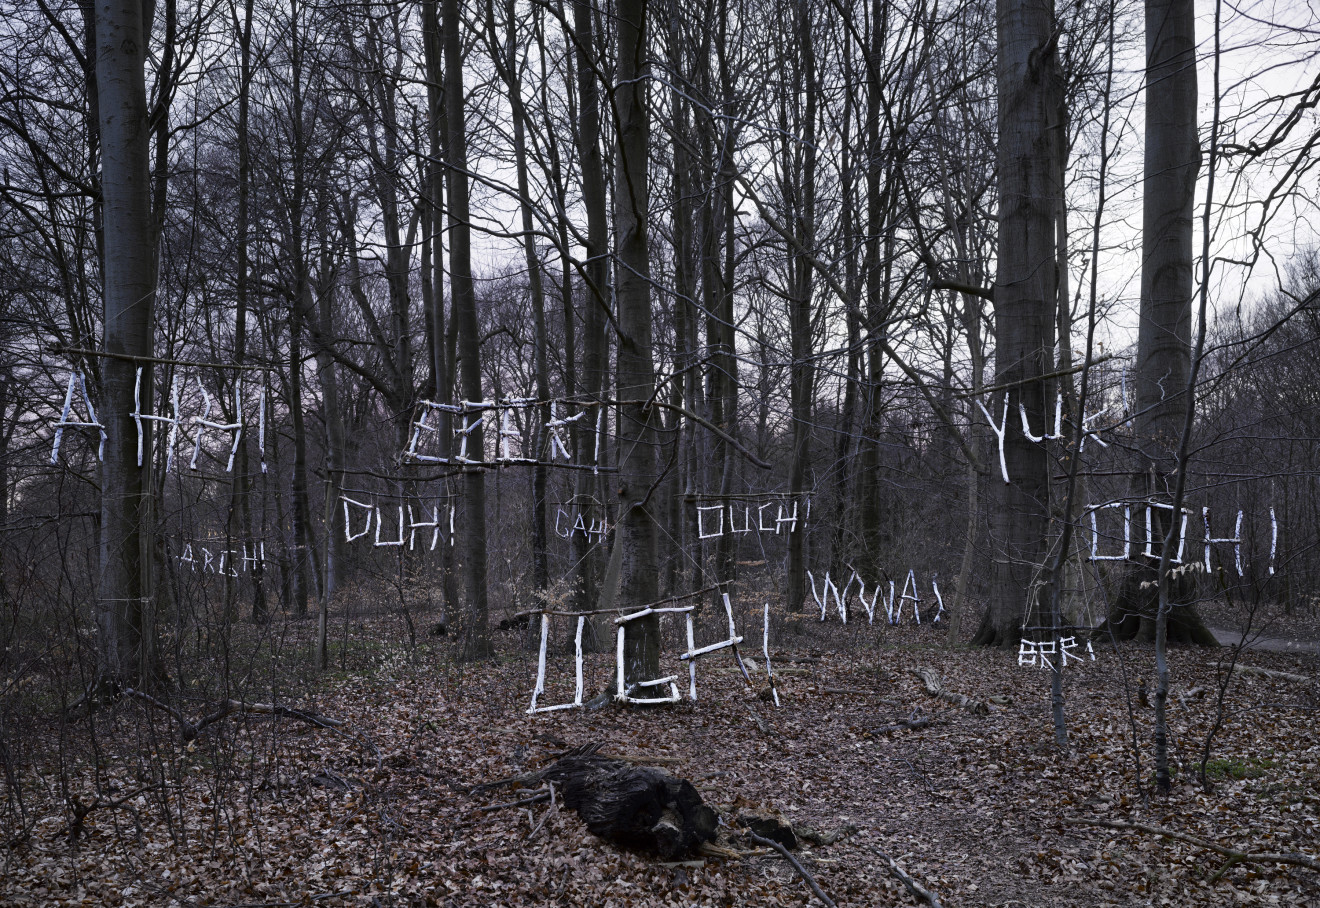 Olaf Breuning, Complaining forest, 2009